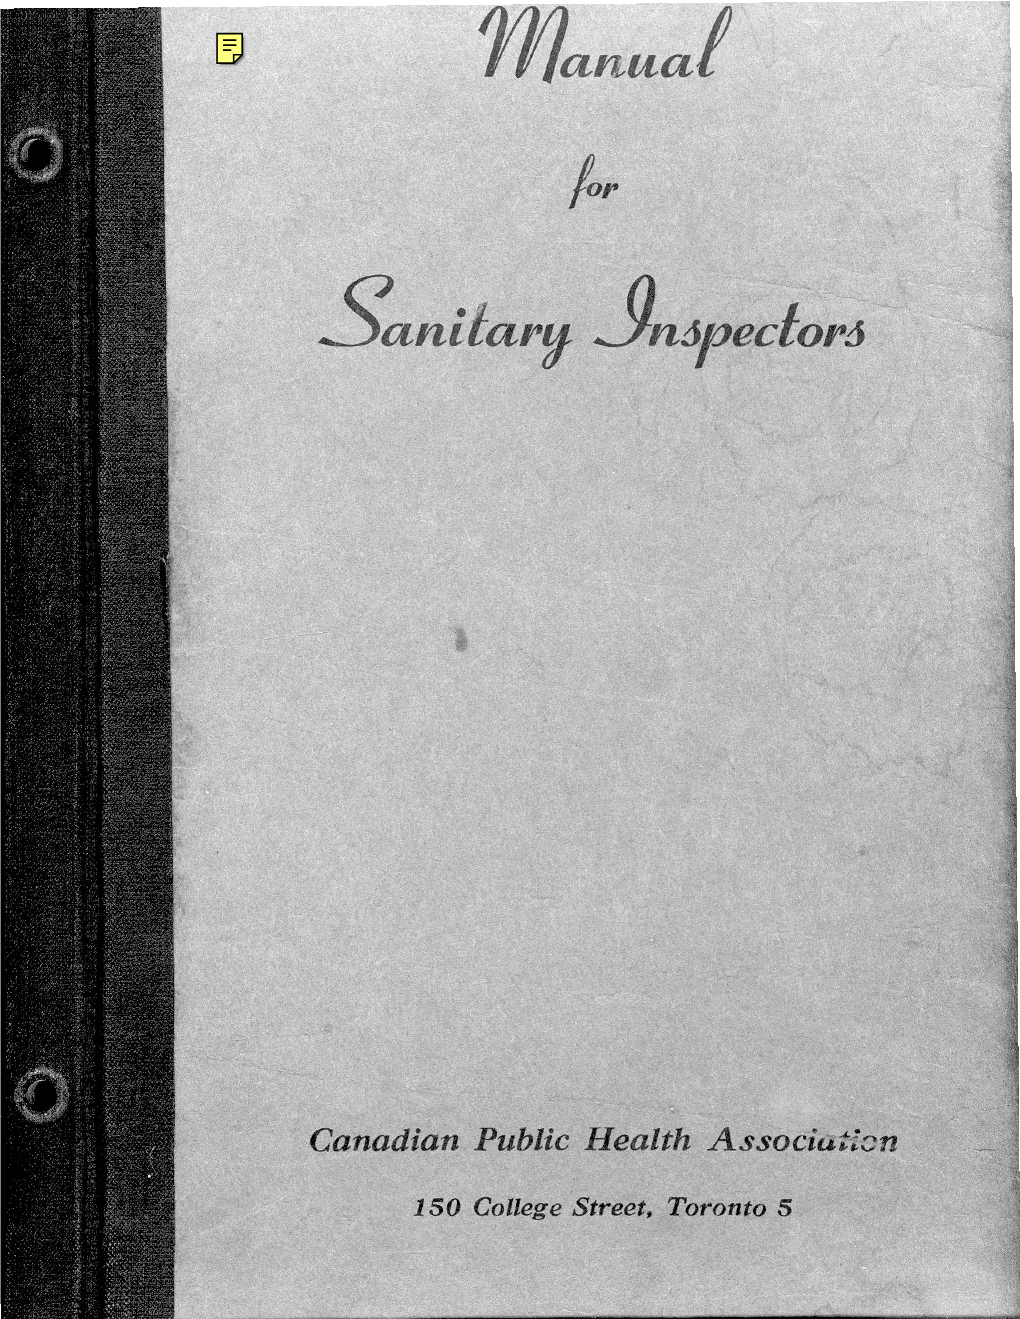 Manual for Sanitary Inspectors